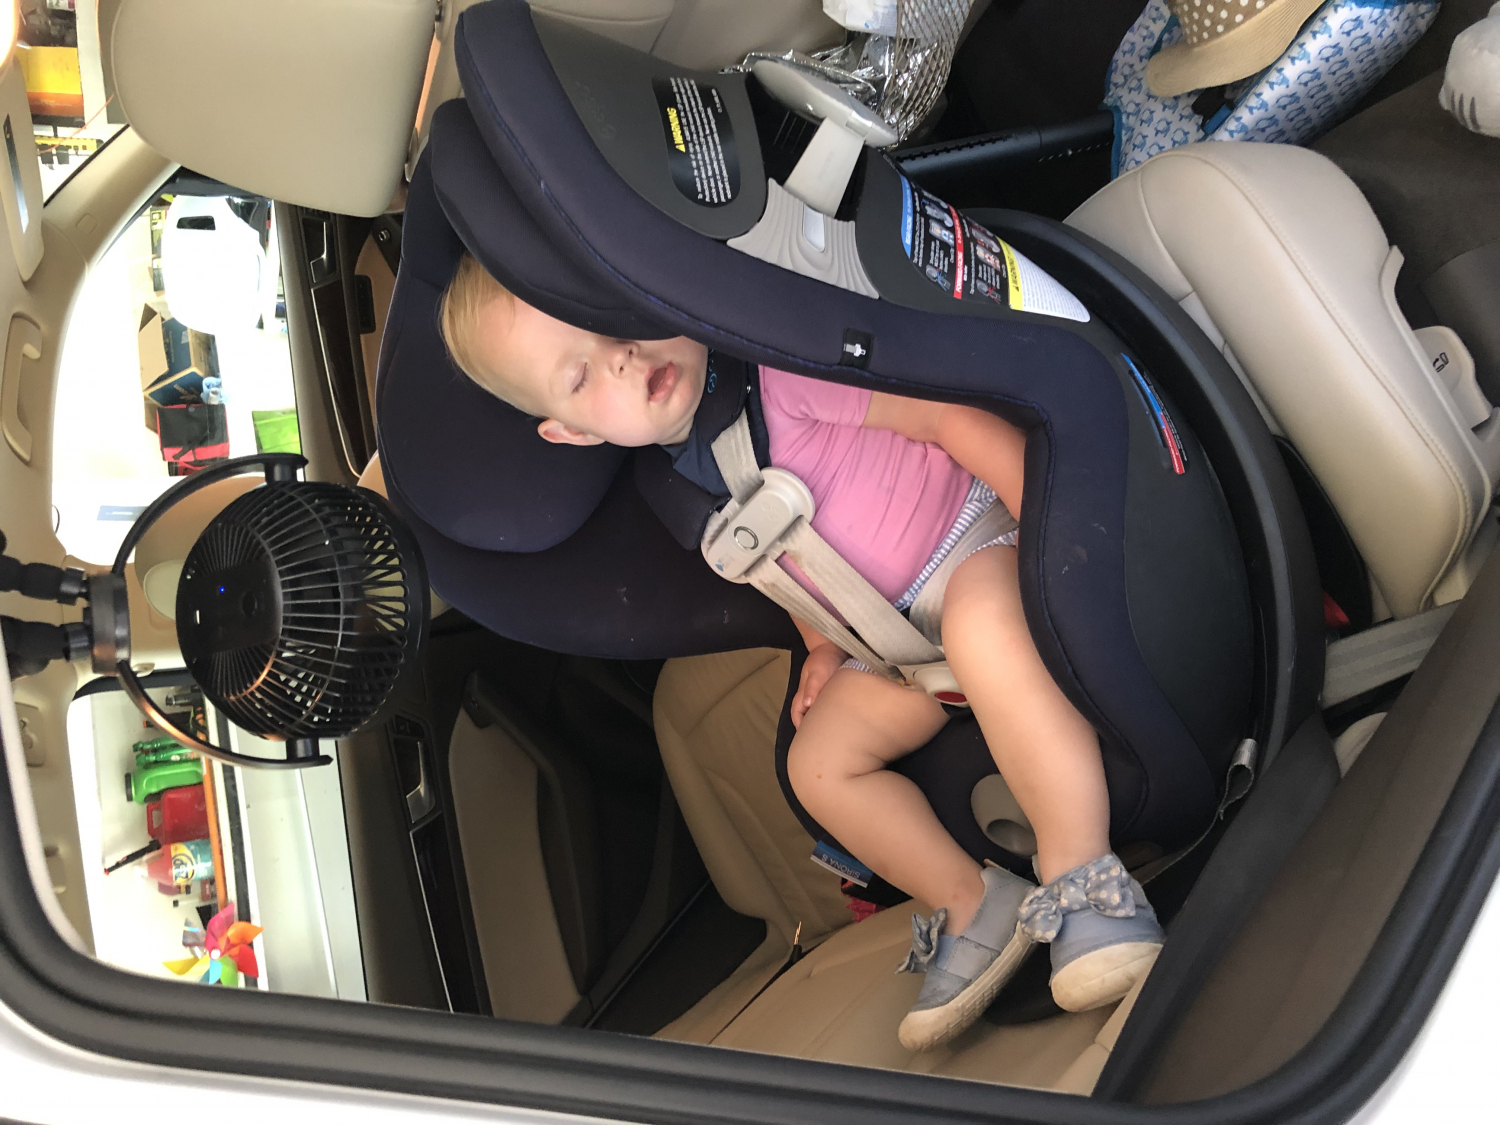 Cybex Sirona S 360 convertible car seat with Sensor Safe Premium